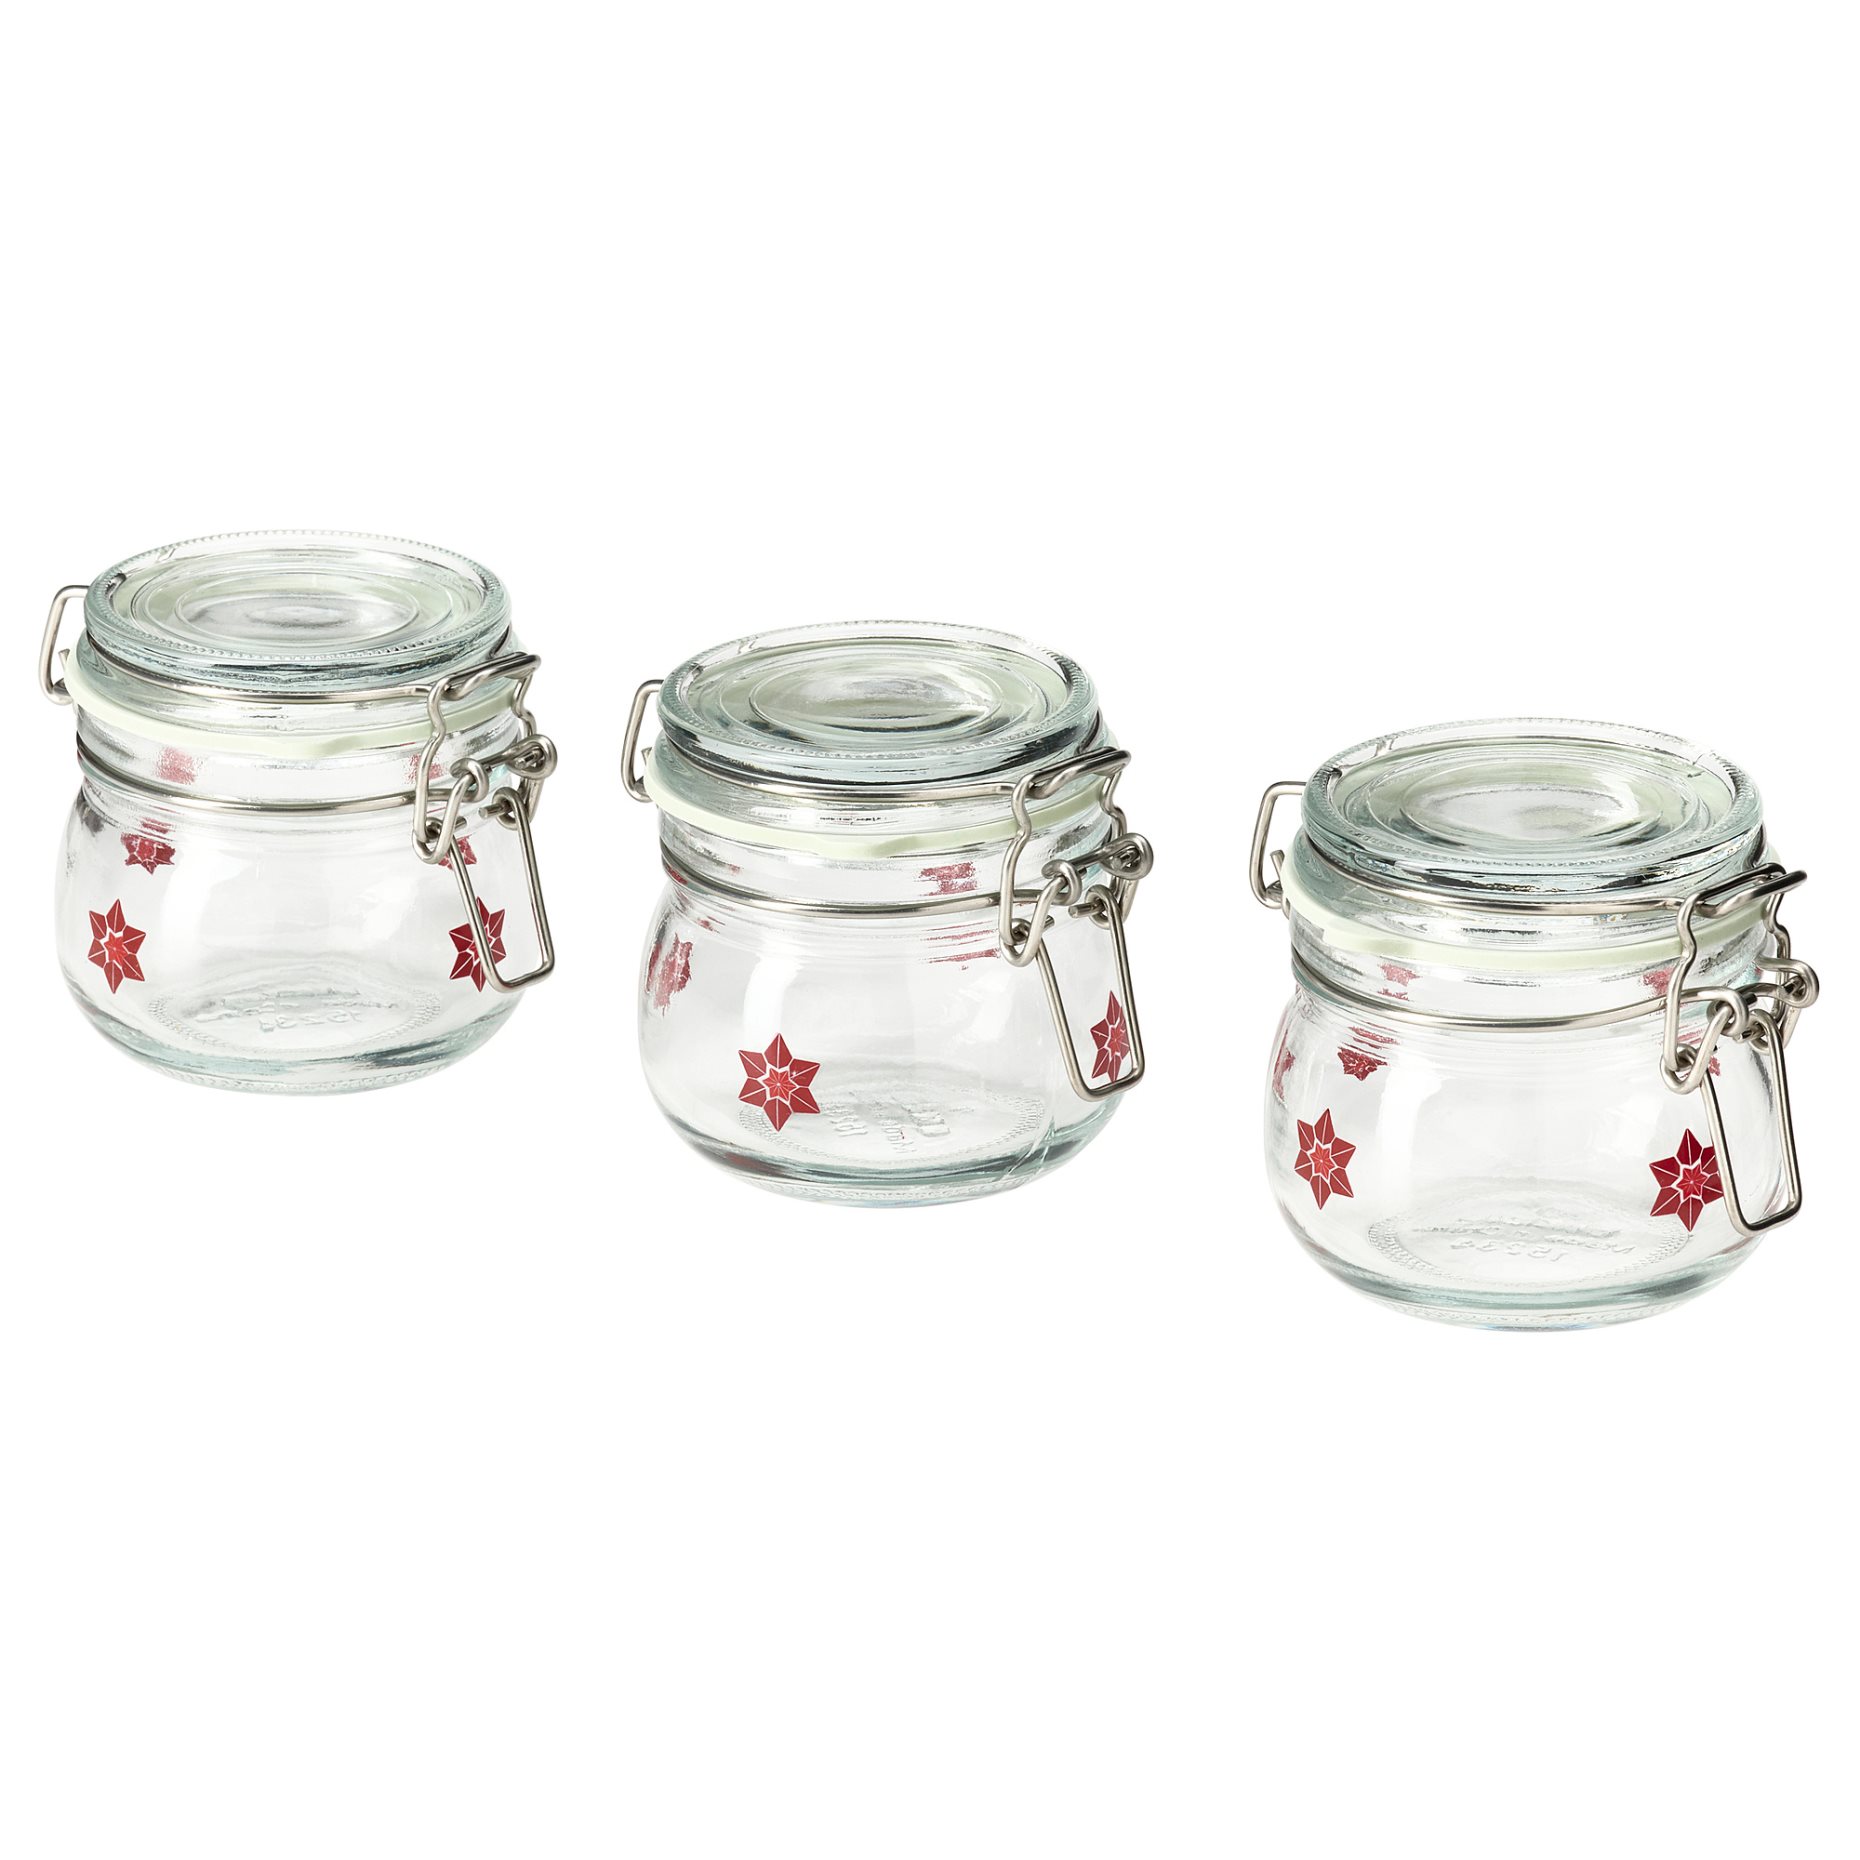 VINTERFINT, jar with lid floral pattern/3 pack, 13 cl, 705.561.66